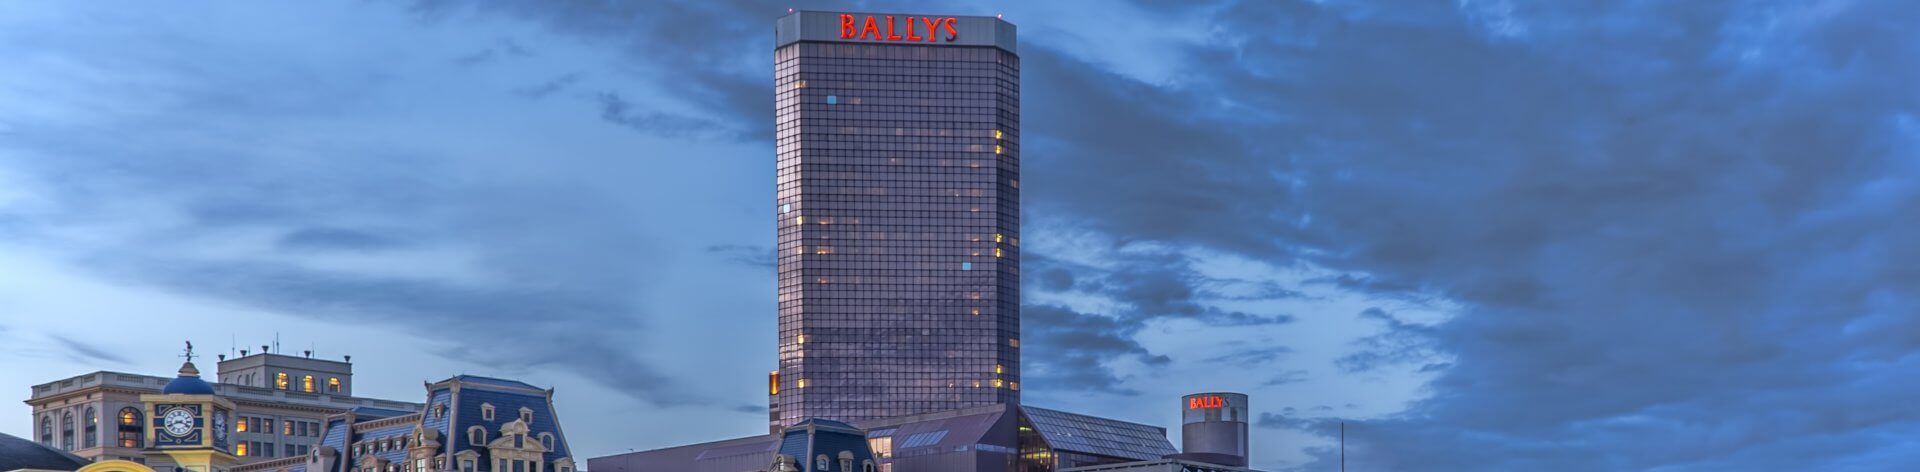 restaurants at ballys casino atlantic city nj